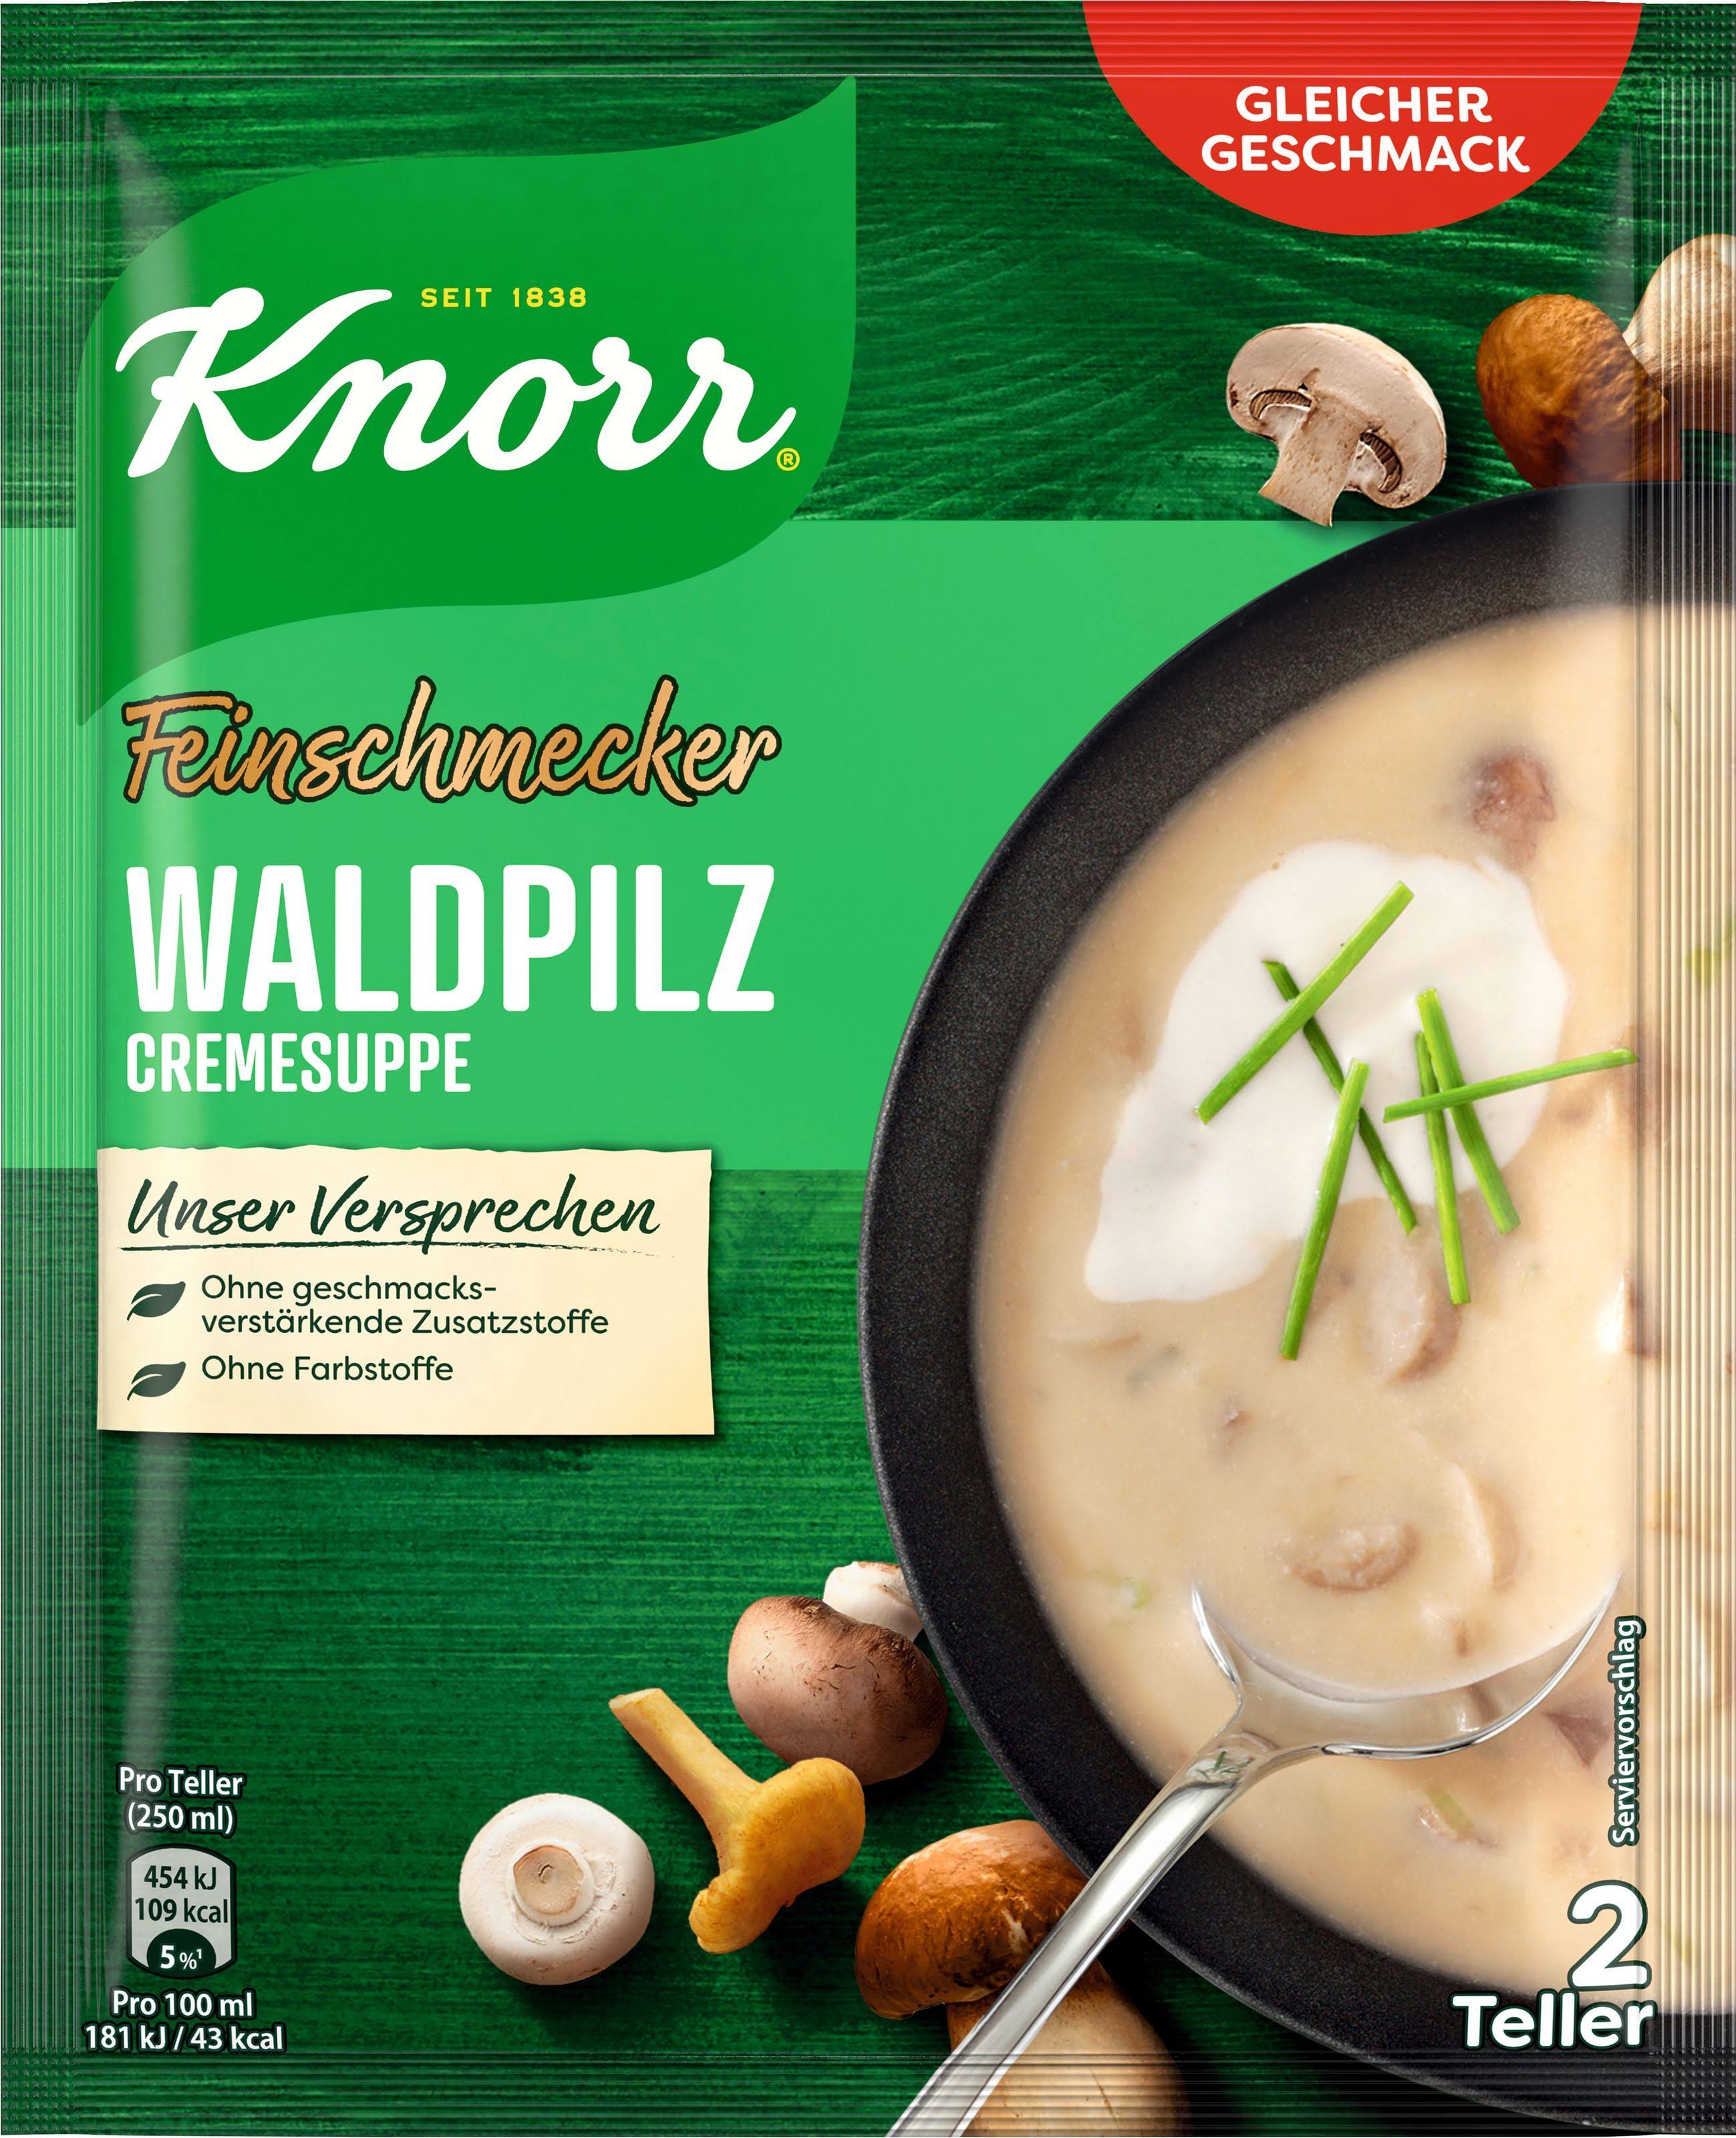 Knorr Gourmet Forest Mushroom Cream Soup